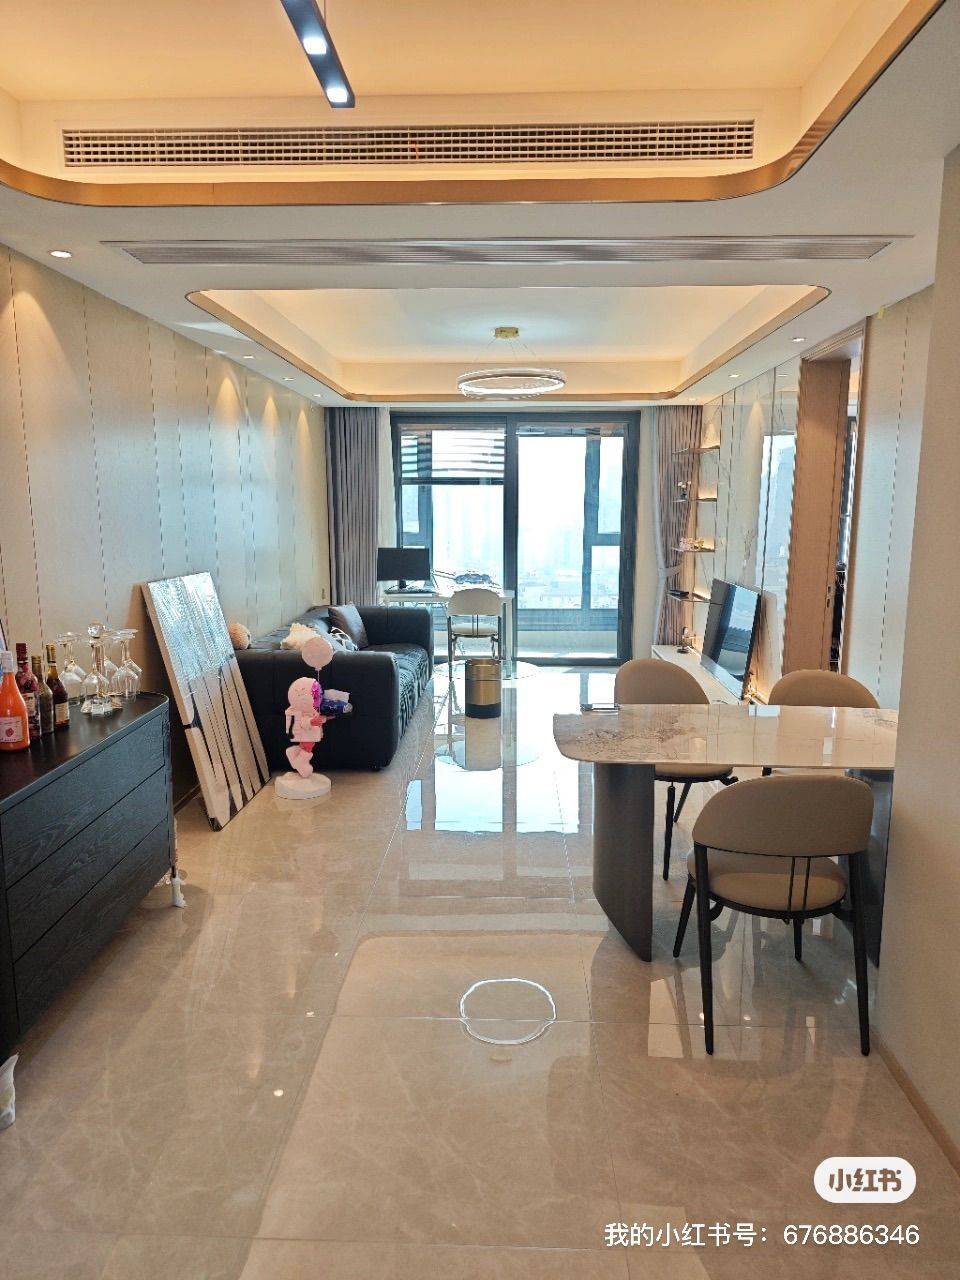 Shanghai-Hongkou-Cozy Home,Clean&Comfy,No Gender Limit,Chilled